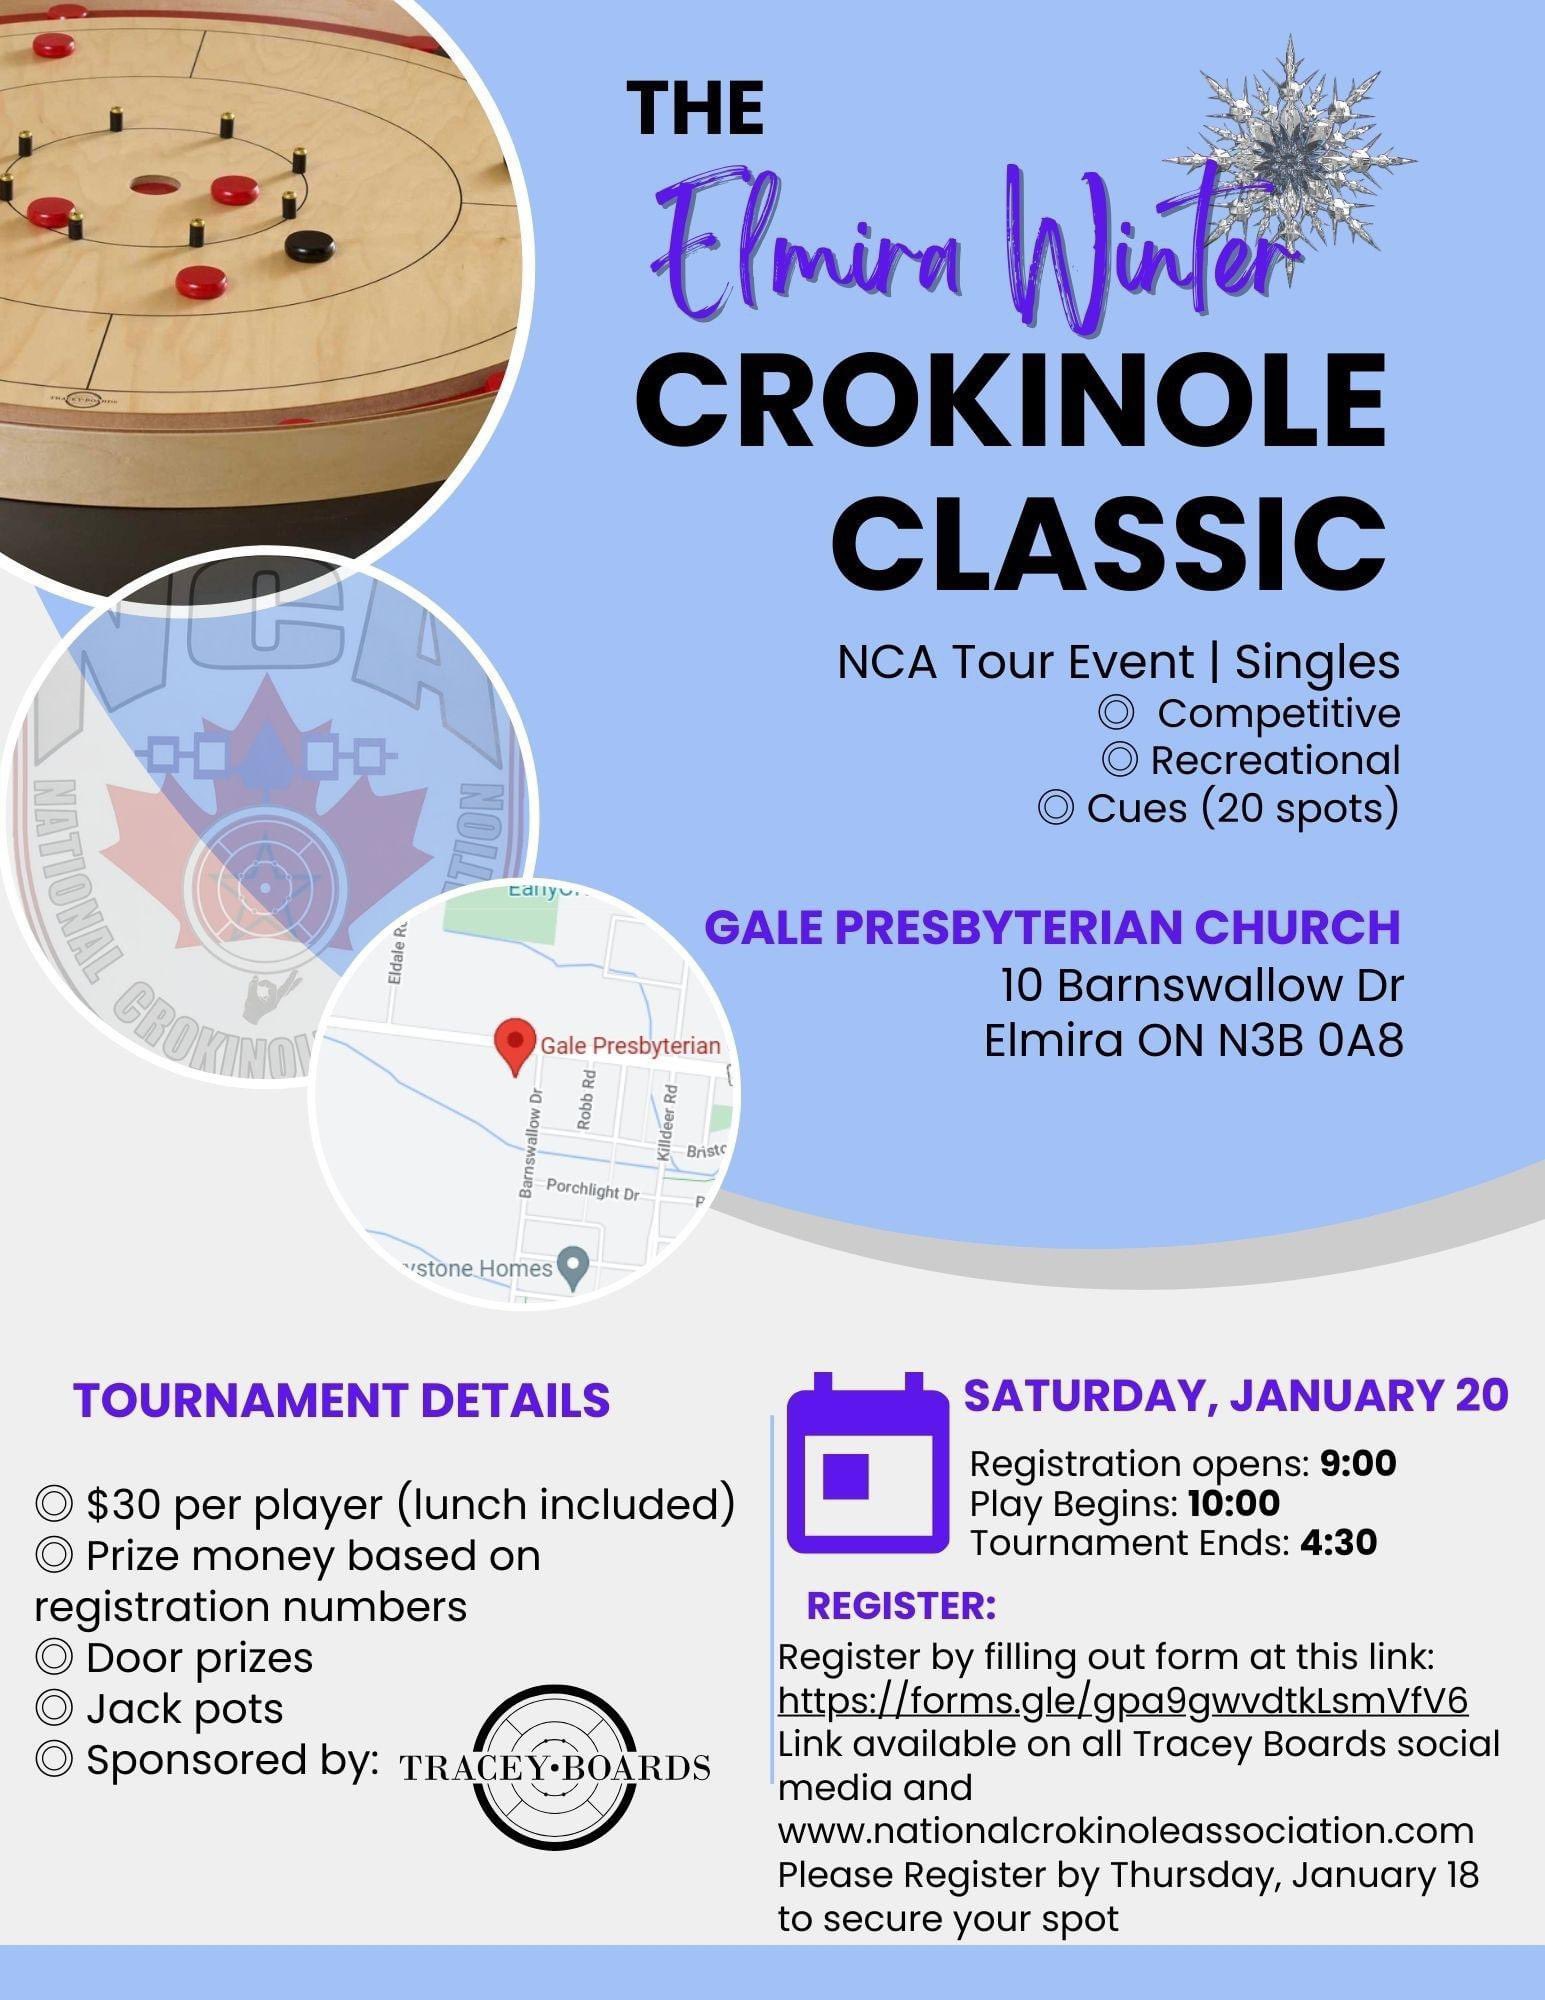 Crokinole UK Tour - Crokinole UK